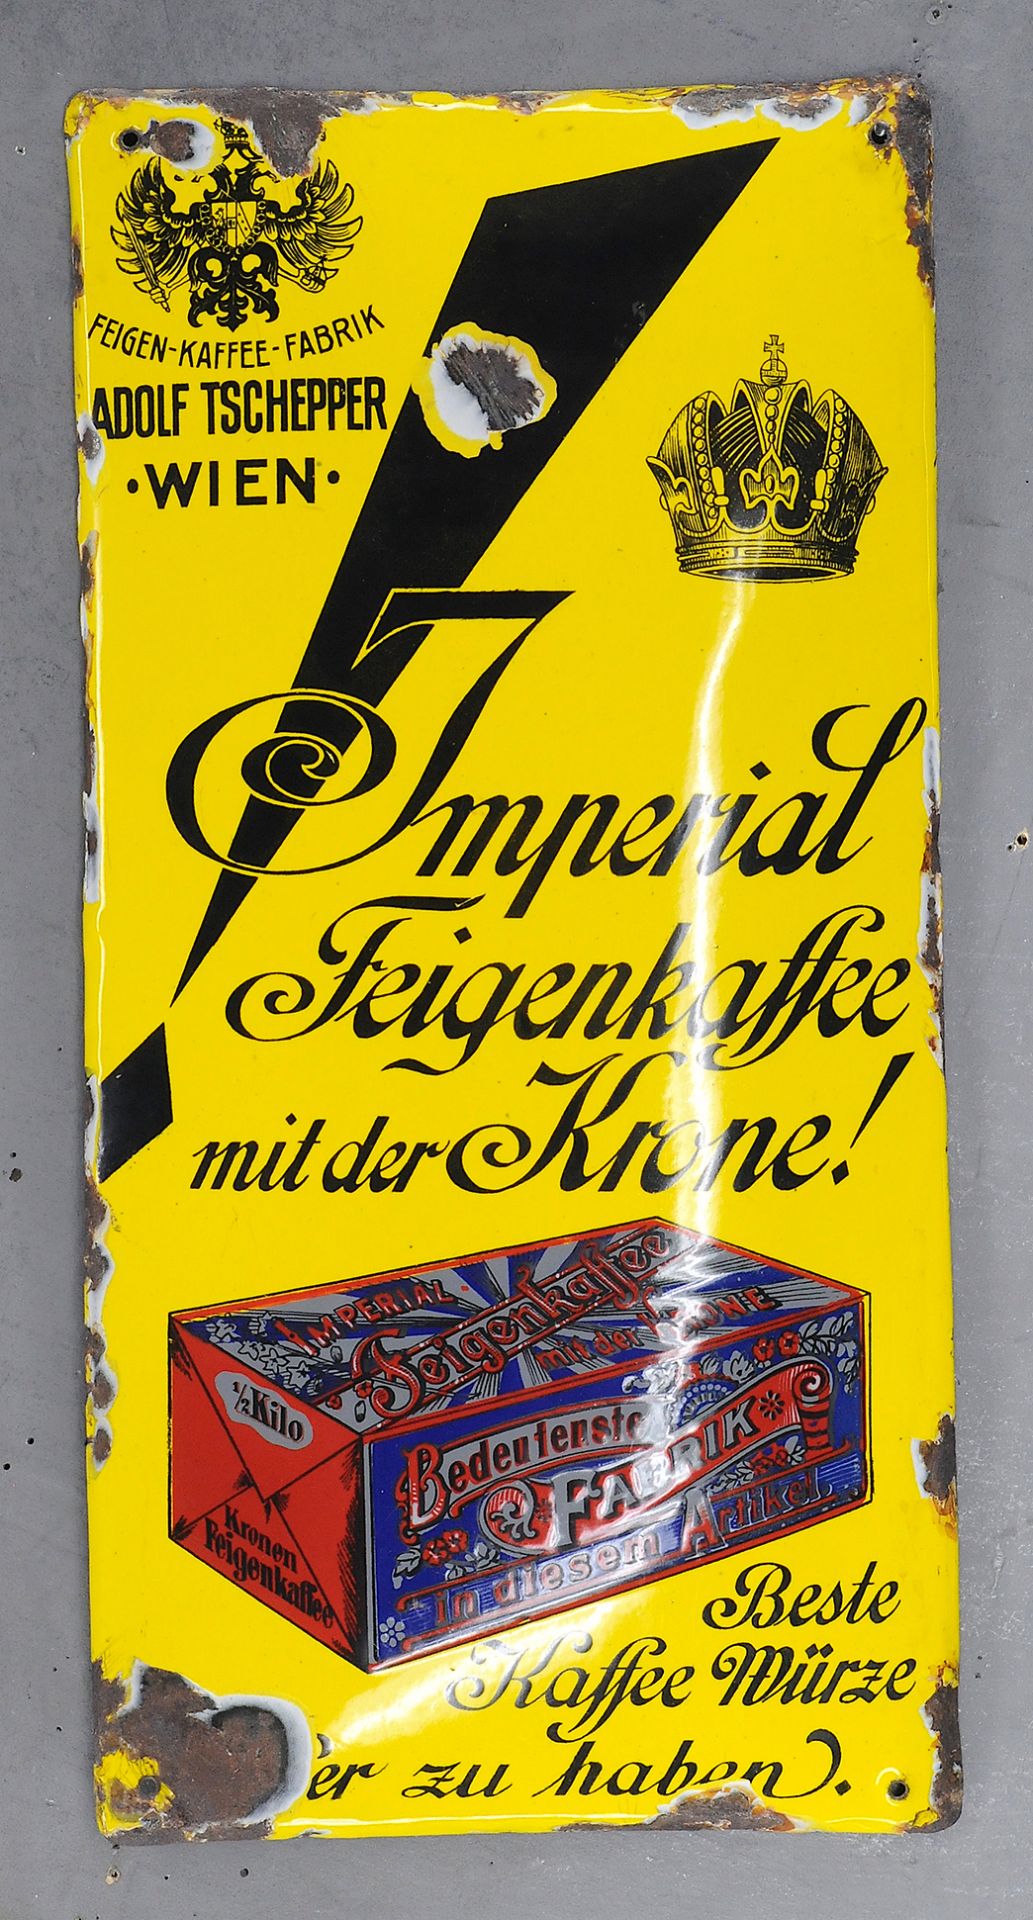 Imperial Feigenkaffee Adolf Tschepper - Image 3 of 3